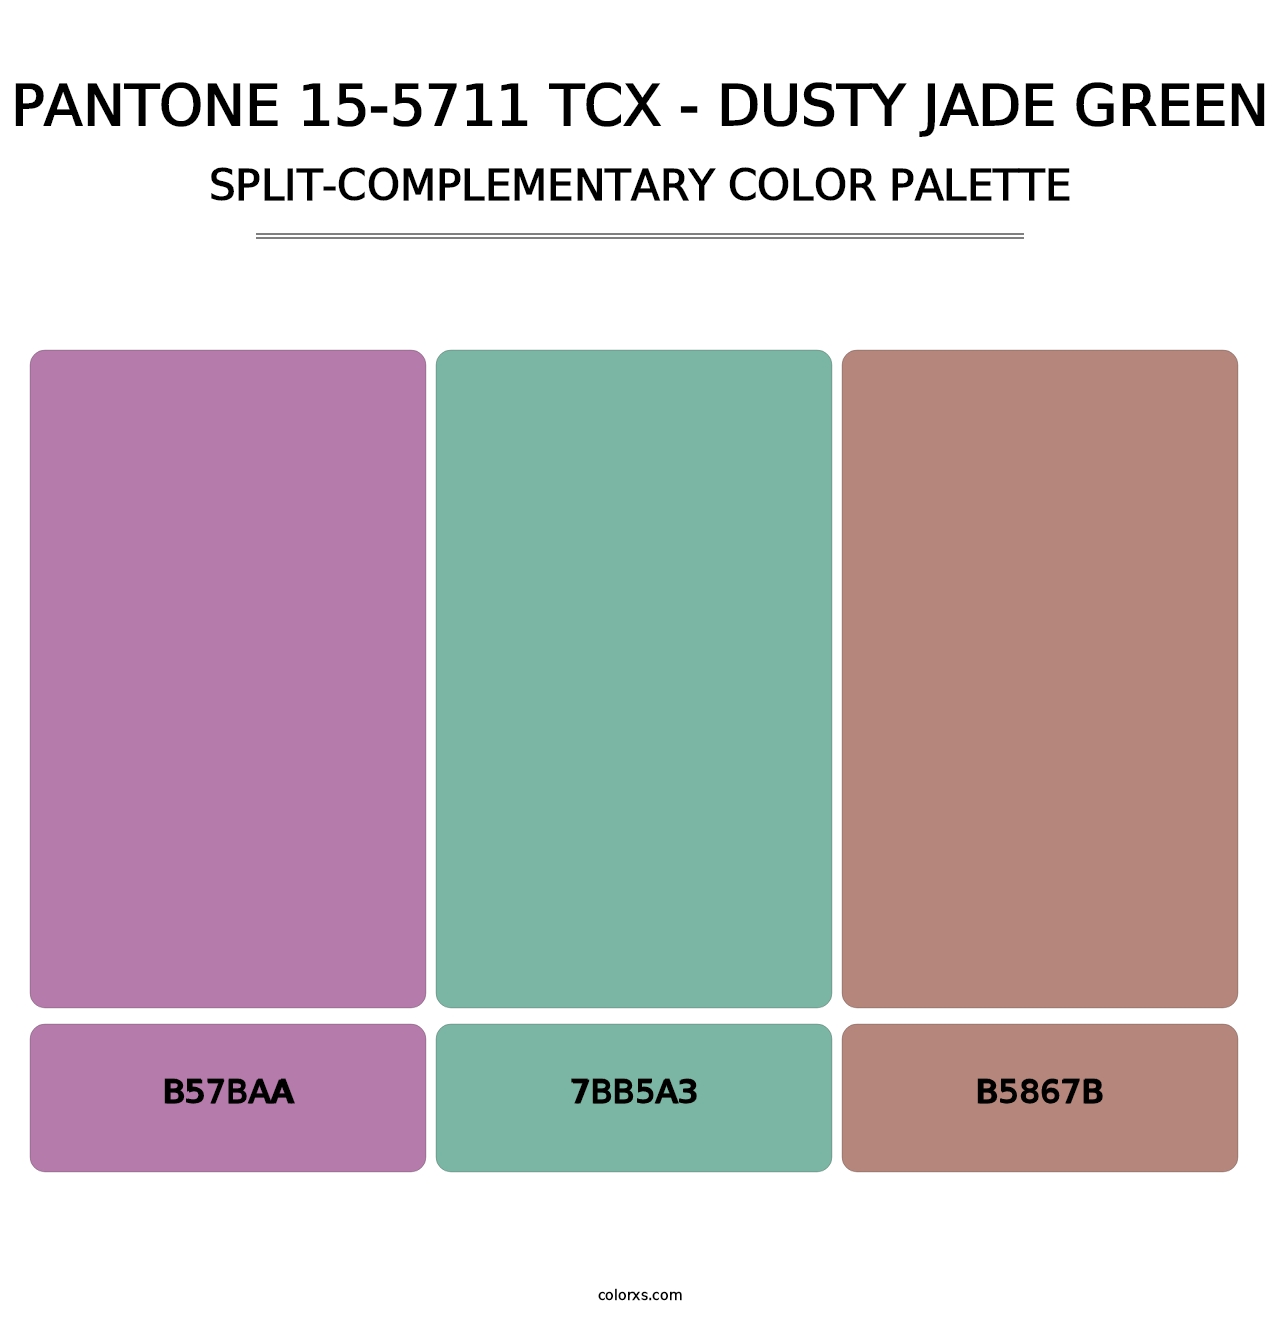 PANTONE 15-5711 TCX - Dusty Jade Green - Split-Complementary Color Palette